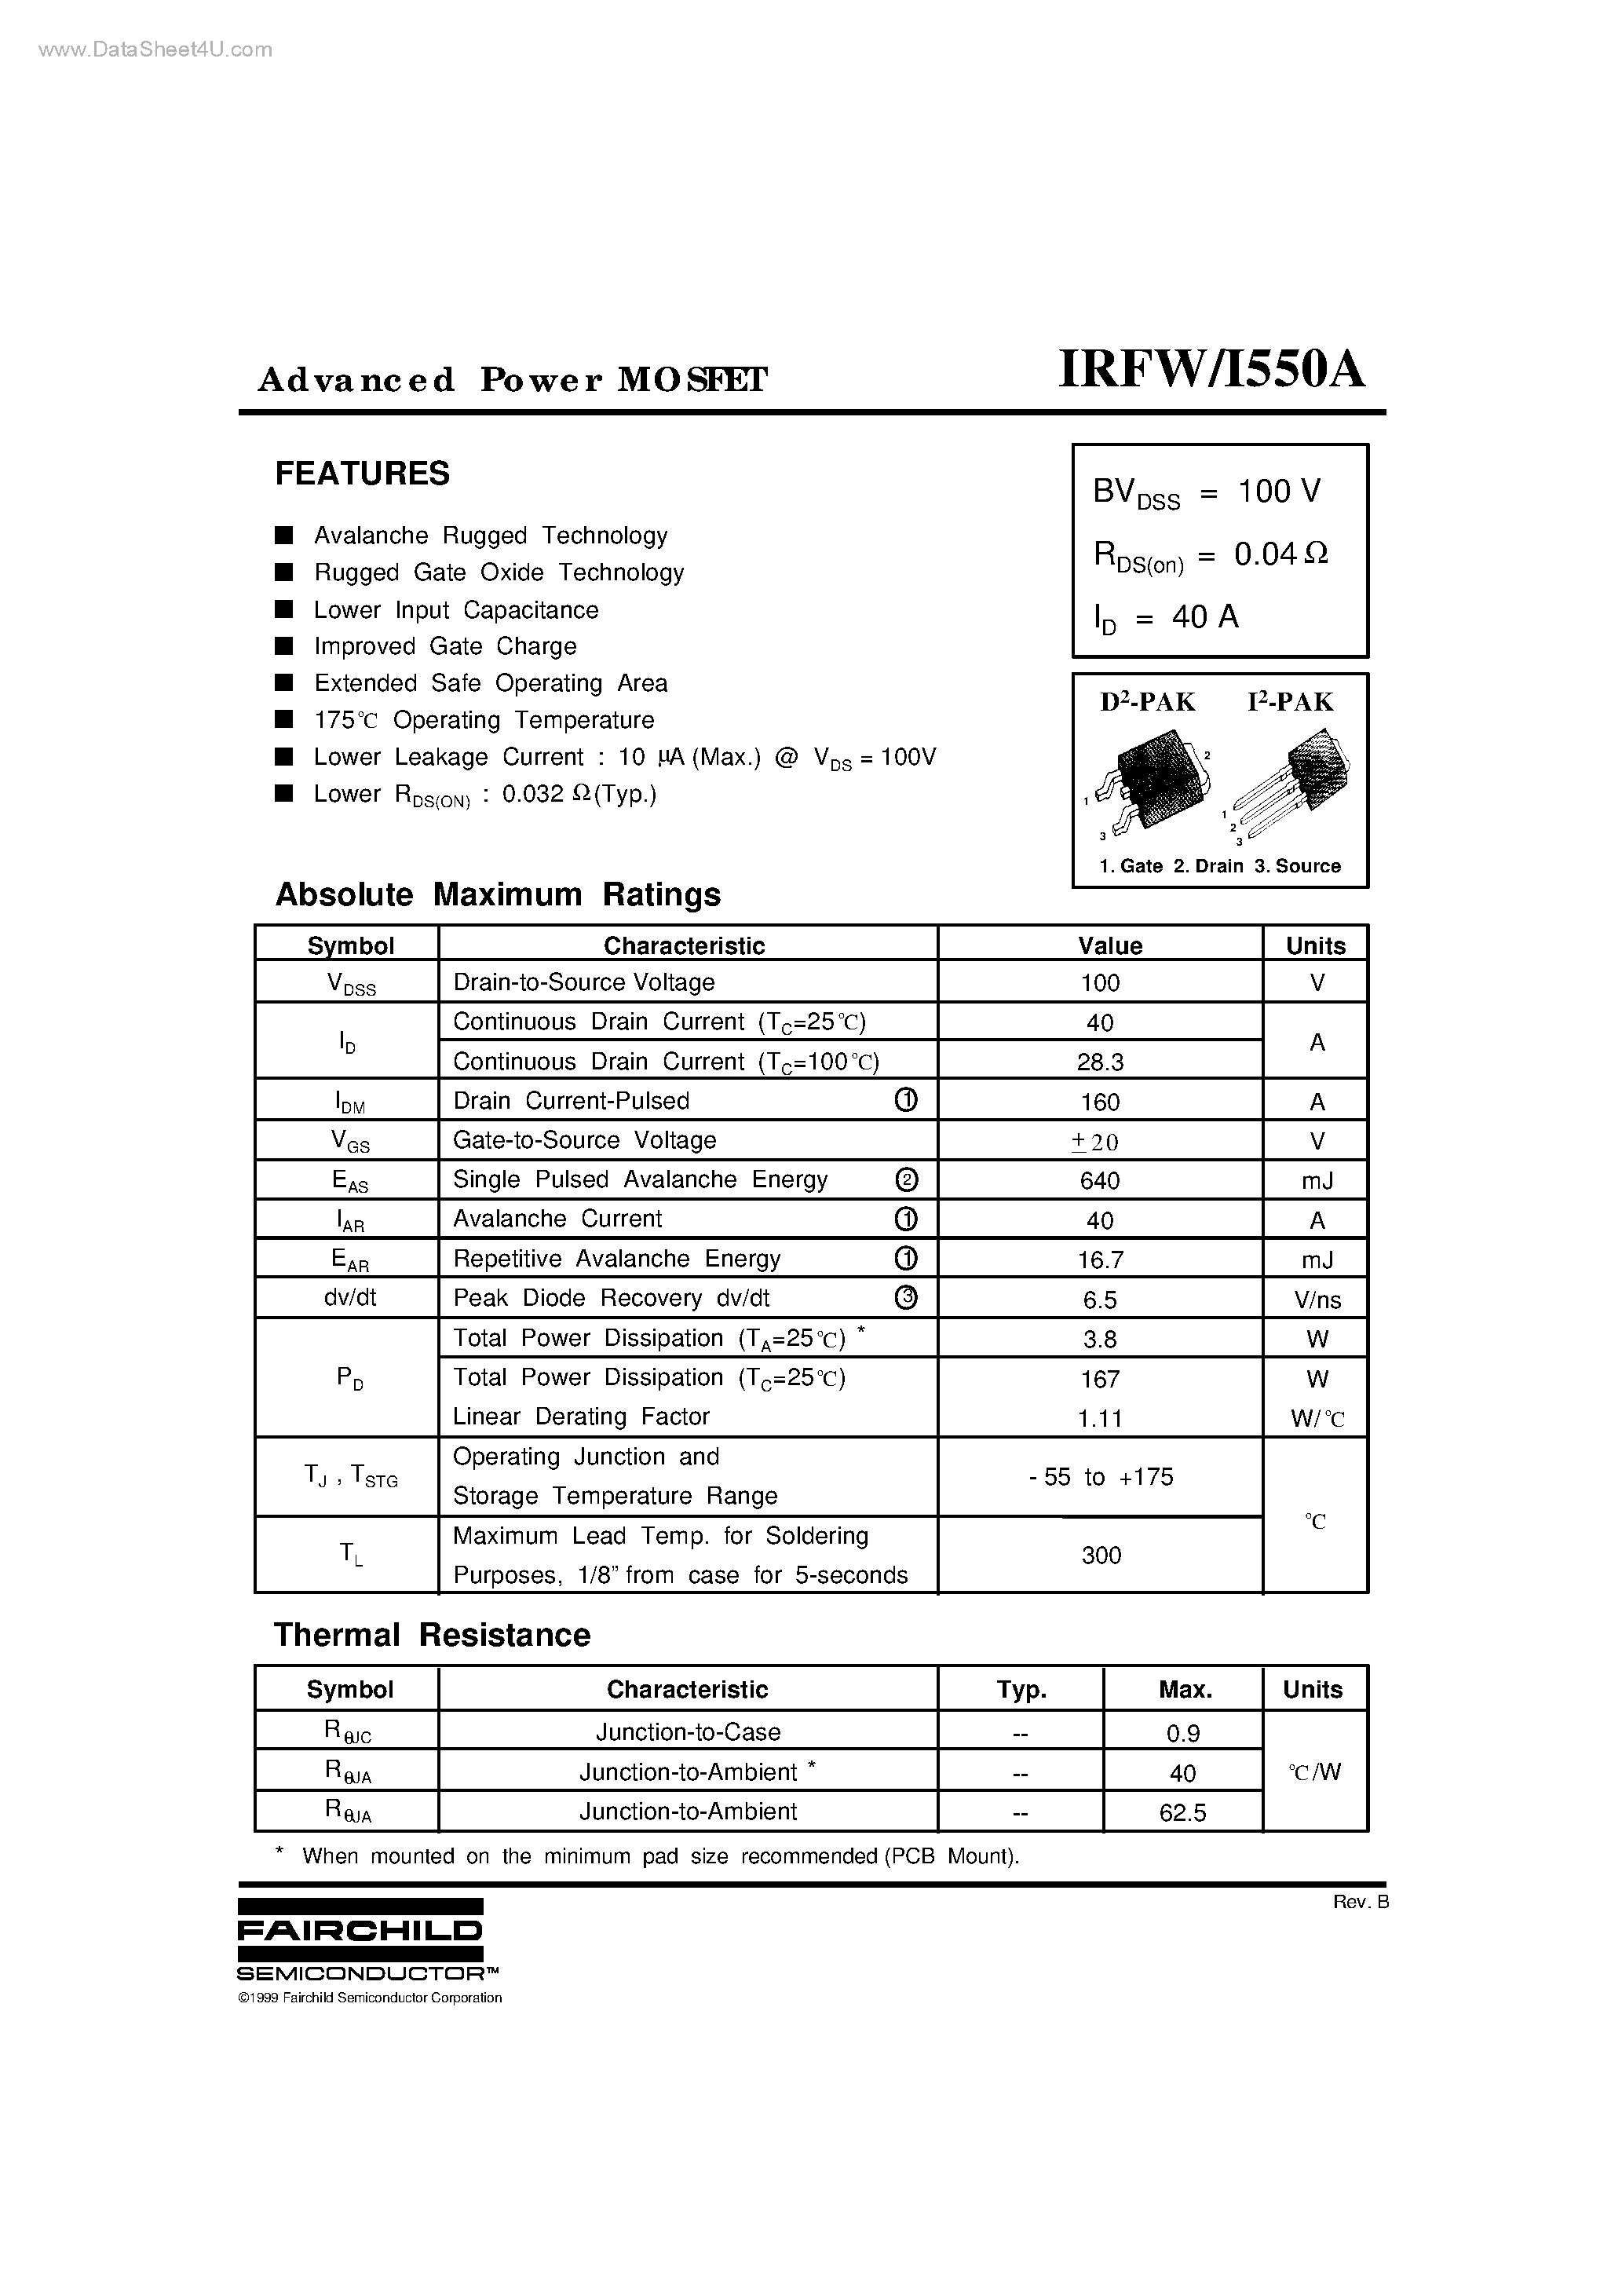 Datasheet IRFI550A - (IRFI550A / IRFW550A) Advanced Power MOSFET page 1